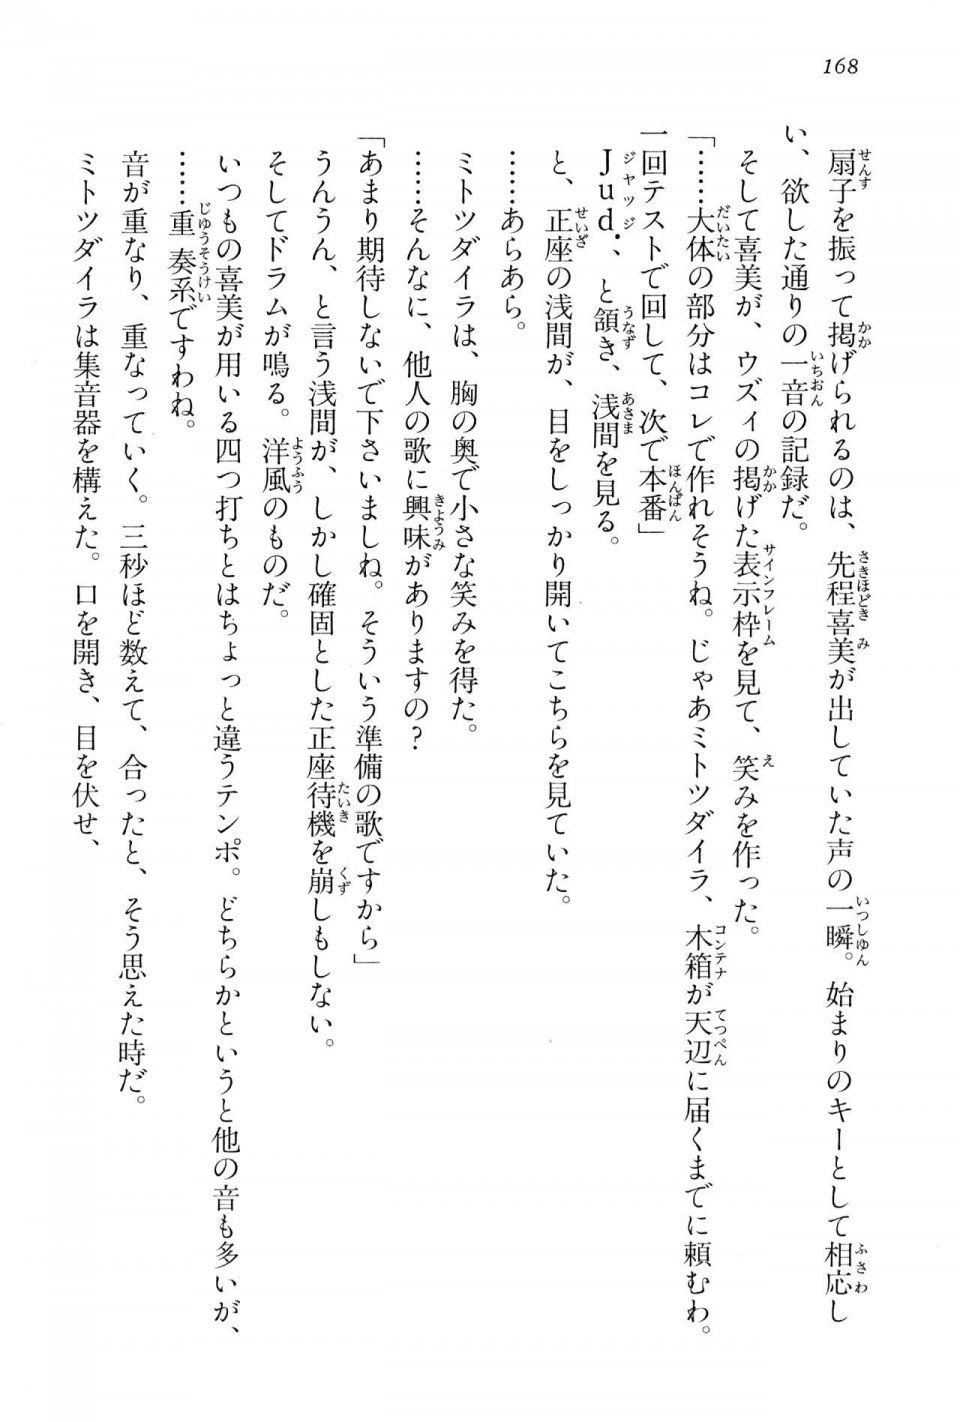 Kyoukai Senjou no Horizon BD Special Mininovel Vol 2(1B) - Photo #172